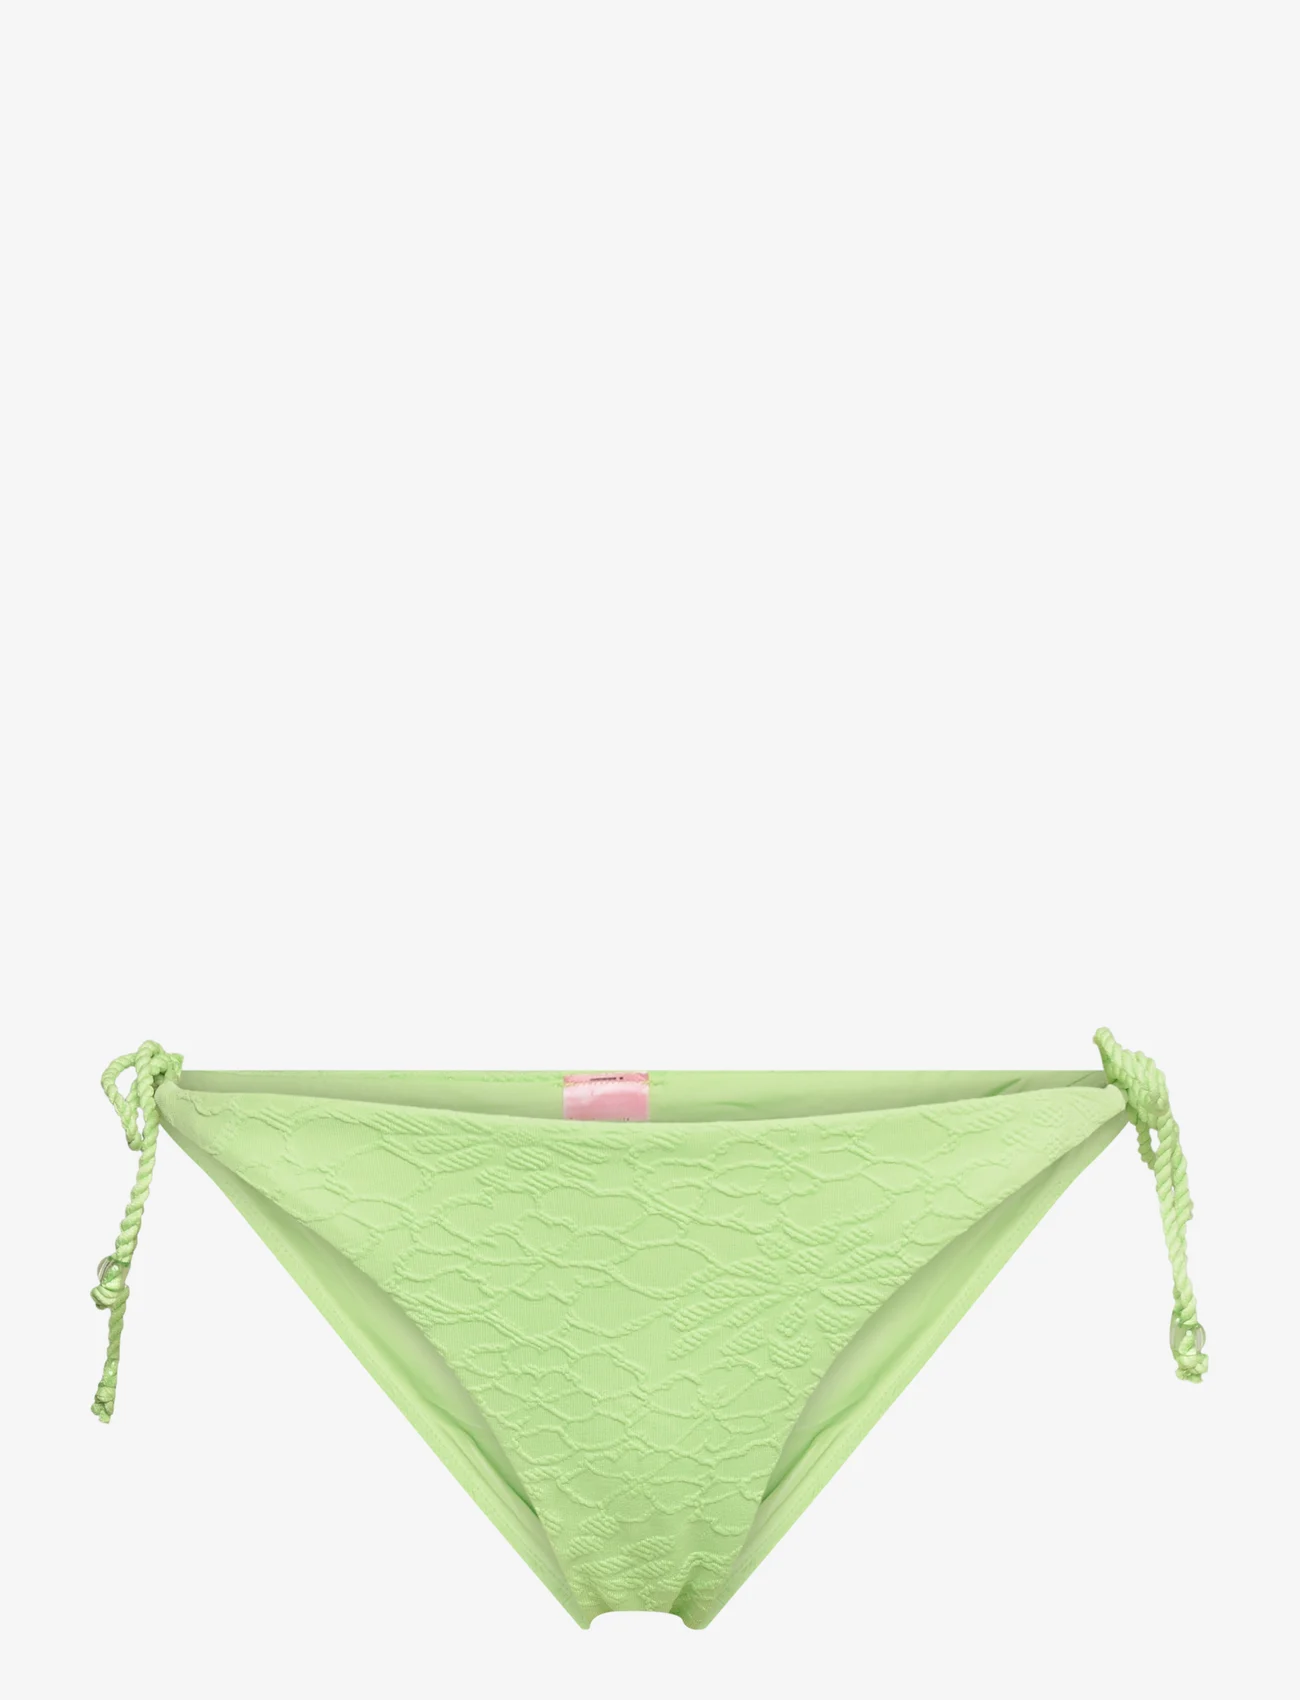 Hunkemöller - Bondi cheeky t - side tie bikinis - paradise green - 0